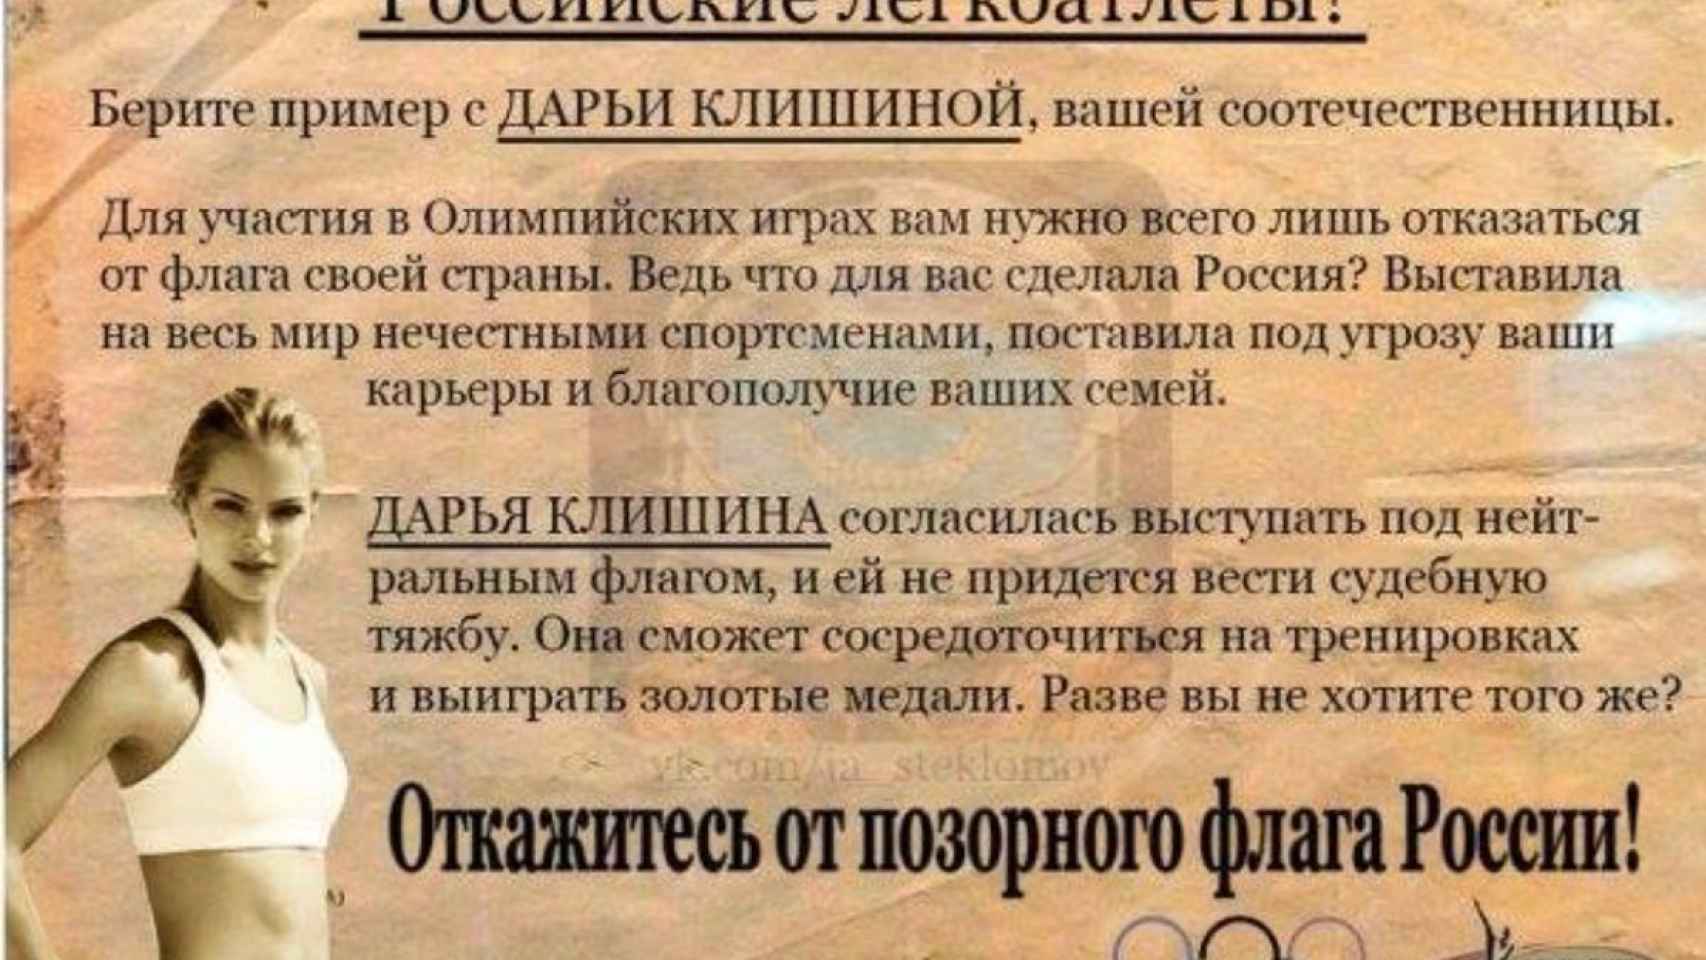 Ejemplo de propaganda nazi para atacar a Klishina.